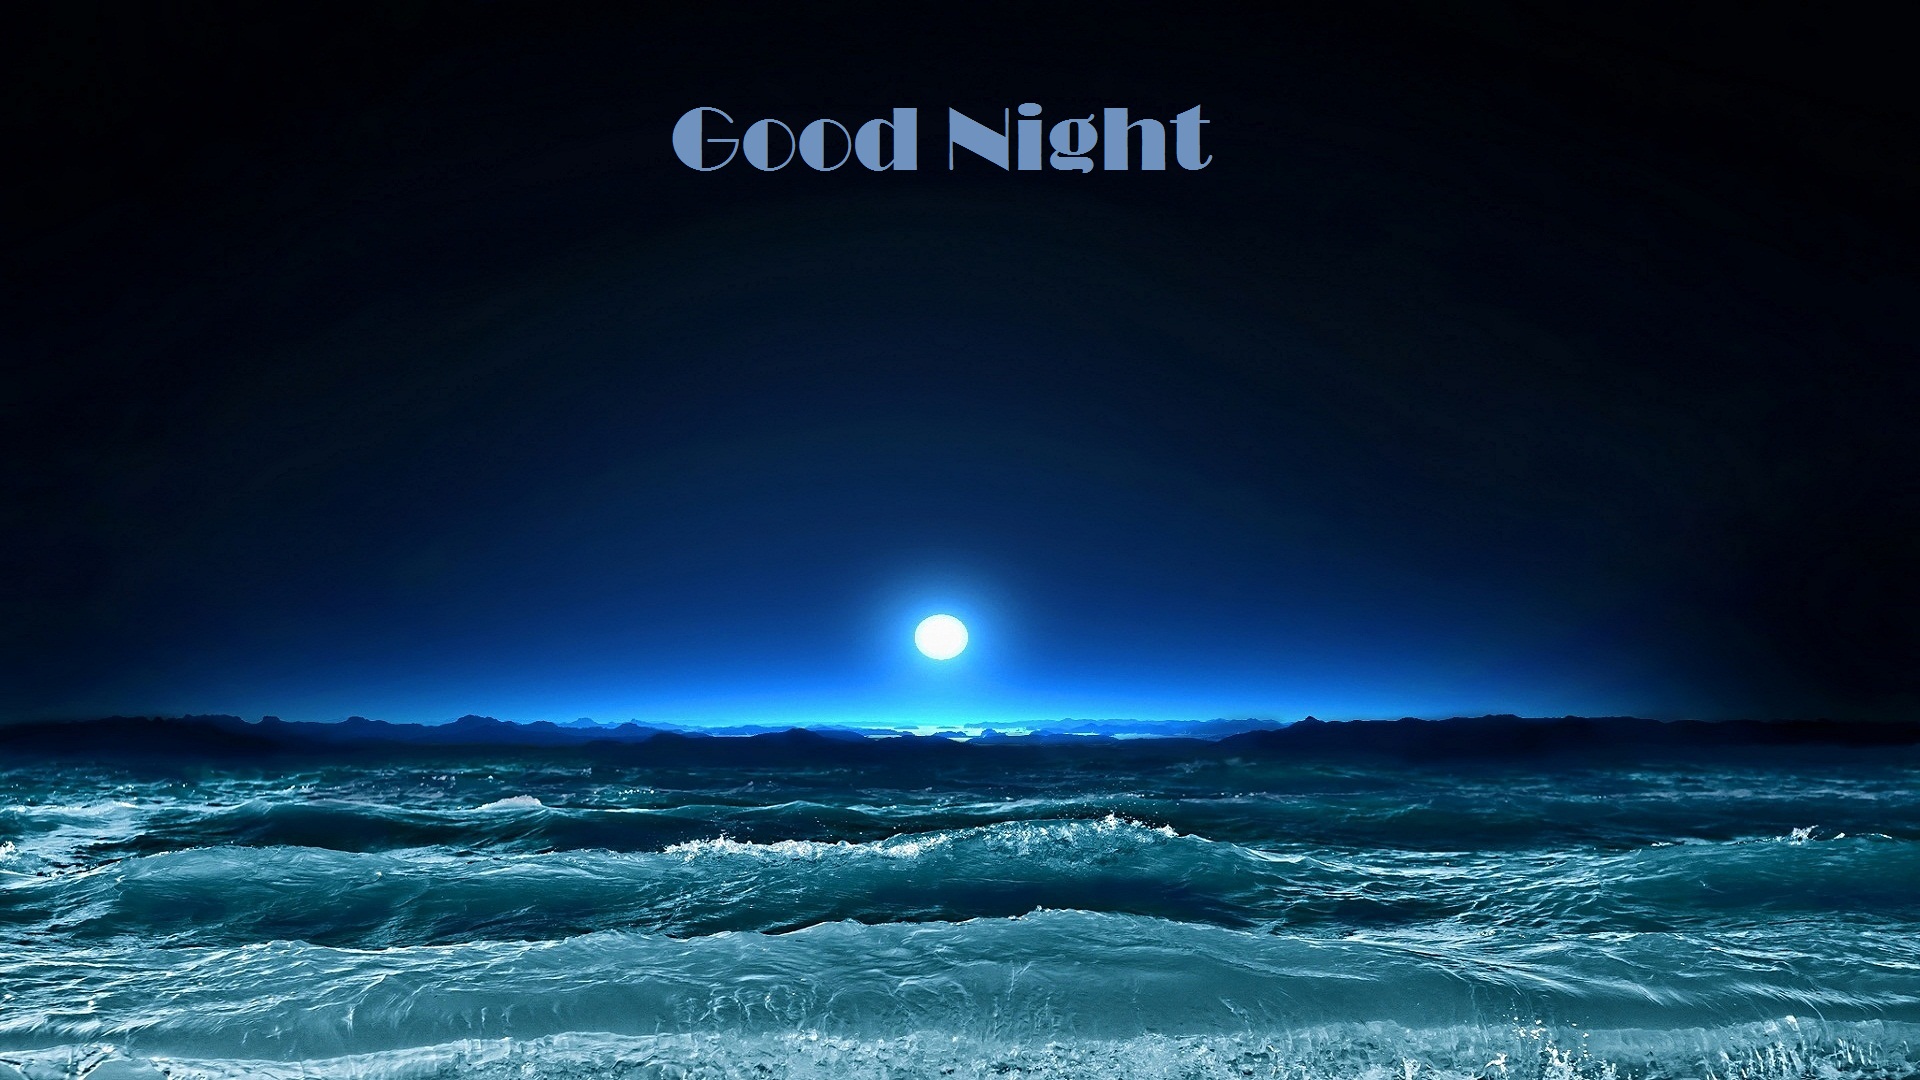 Good Night Wallpaper High Resolution Download4 - Good Night Full Hd Image New - HD Wallpaper 